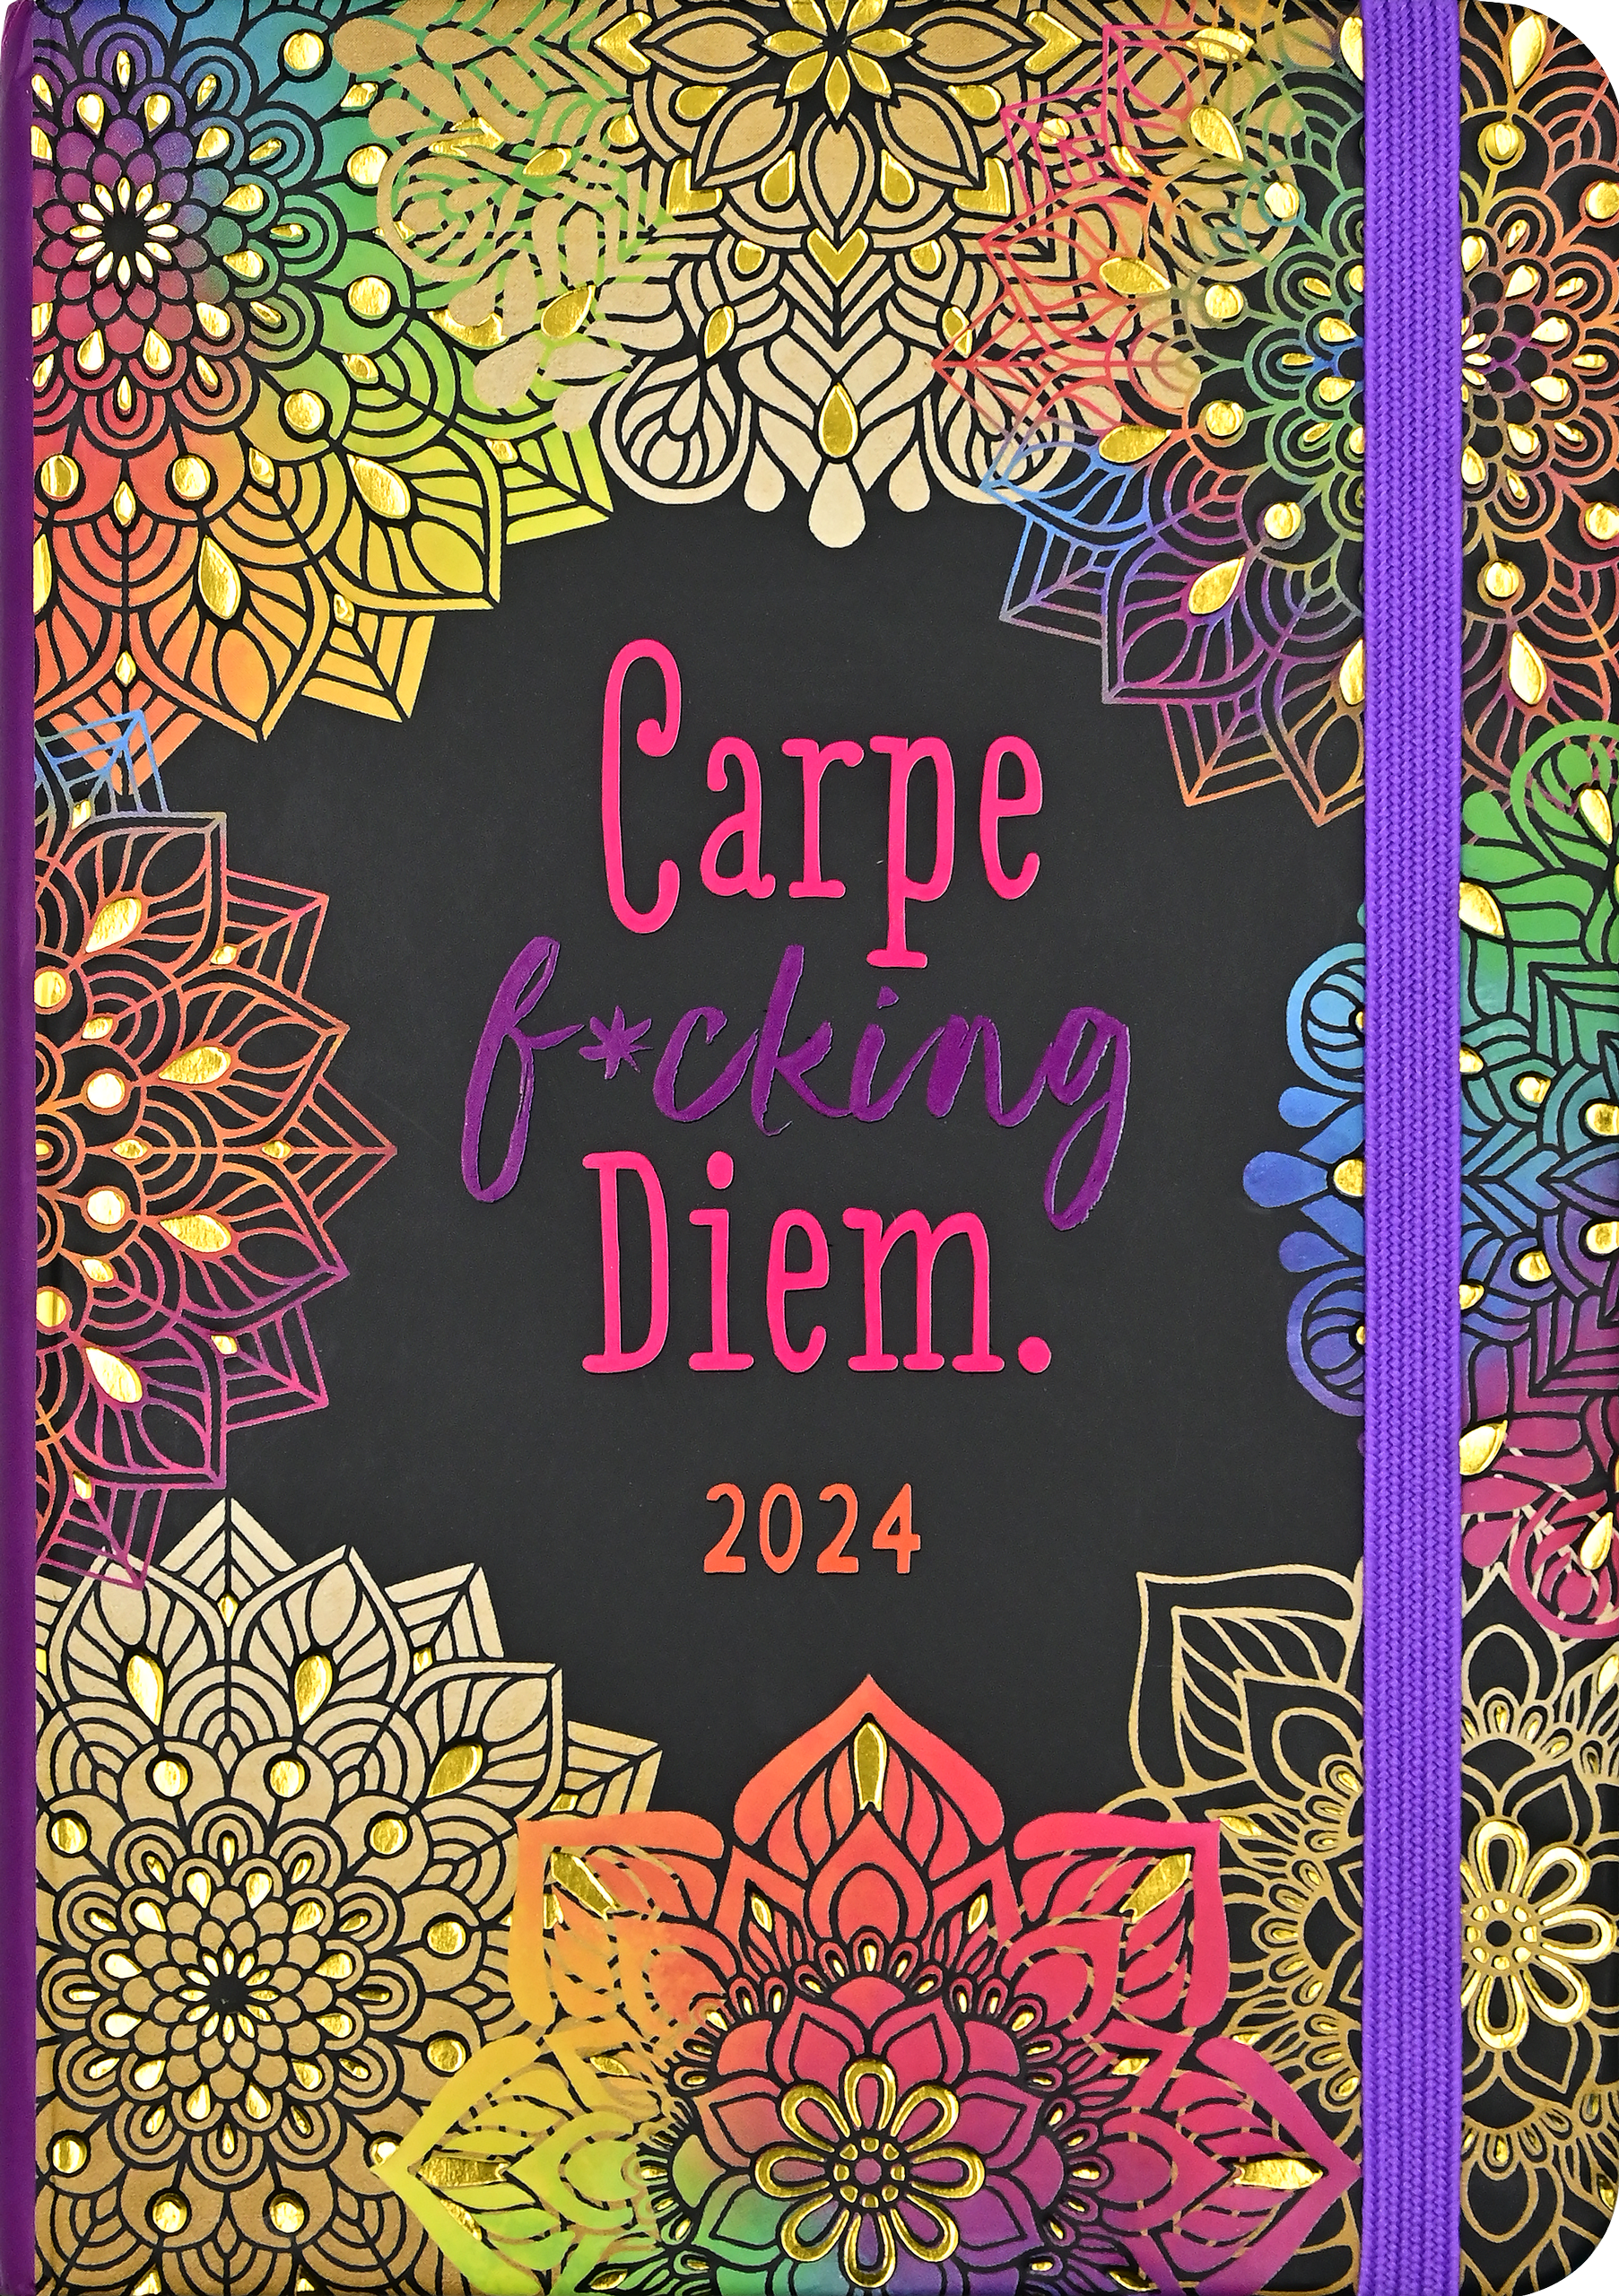 2024 Carpe F*cking Diem Engagement Calendar